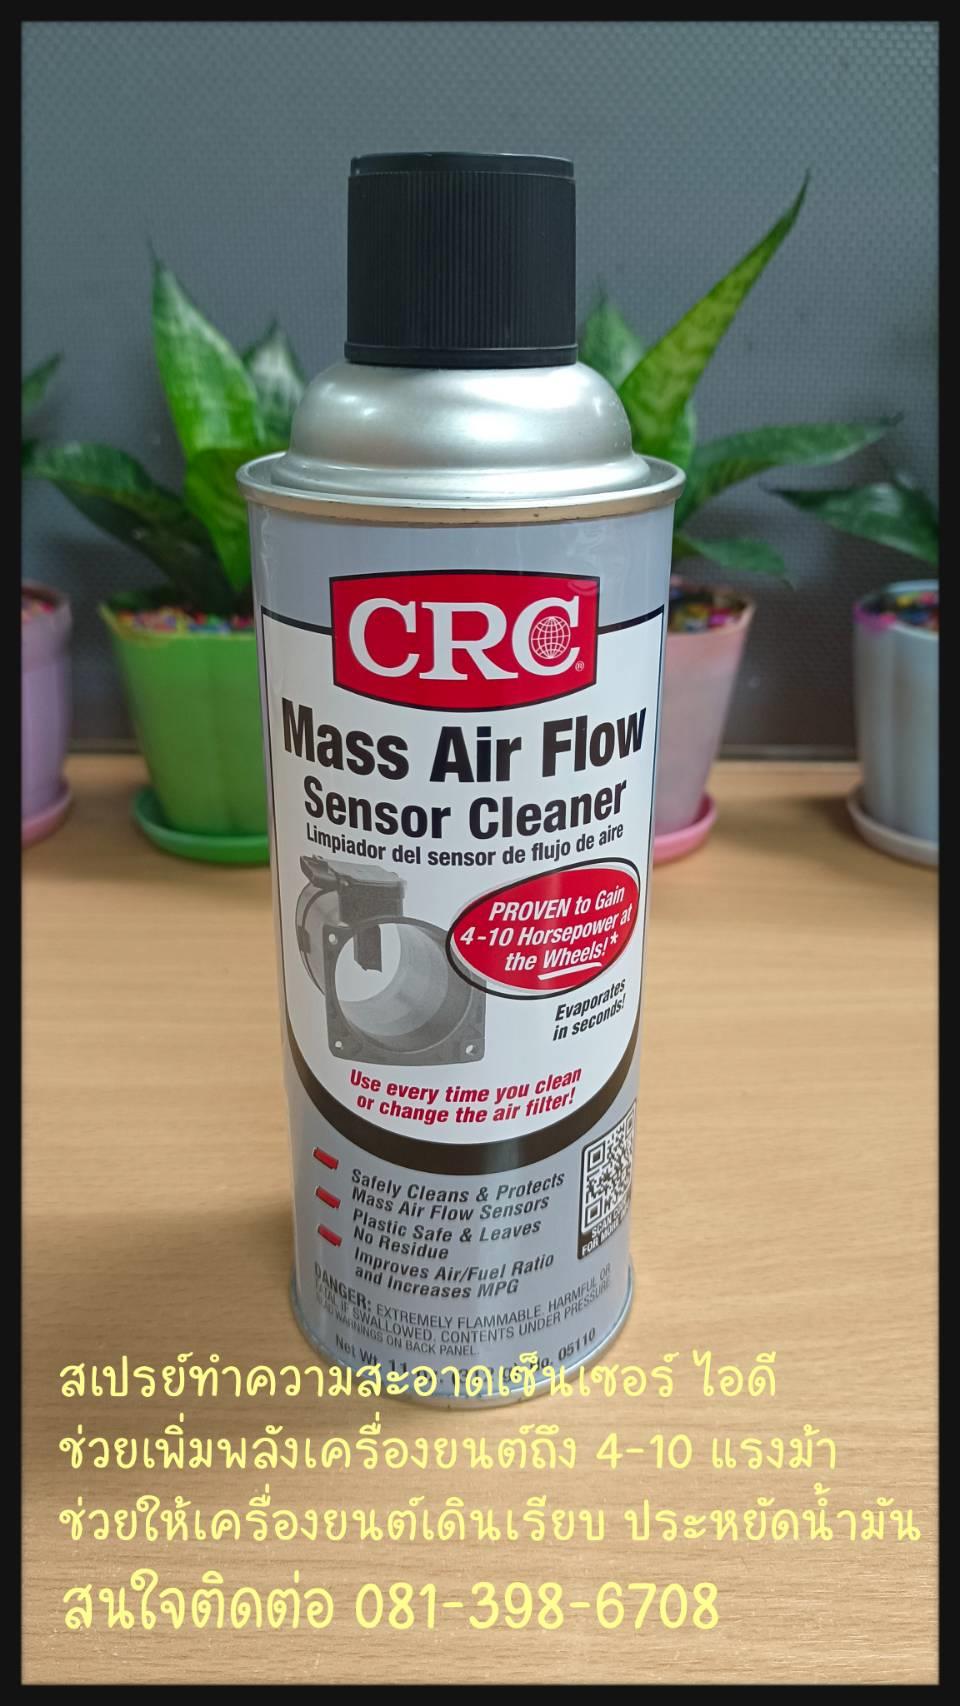 MASS AIR FLOW SENSOR CLEANER สเปรย์ทำความสะอาดเซ็นเซอร์ไอดี